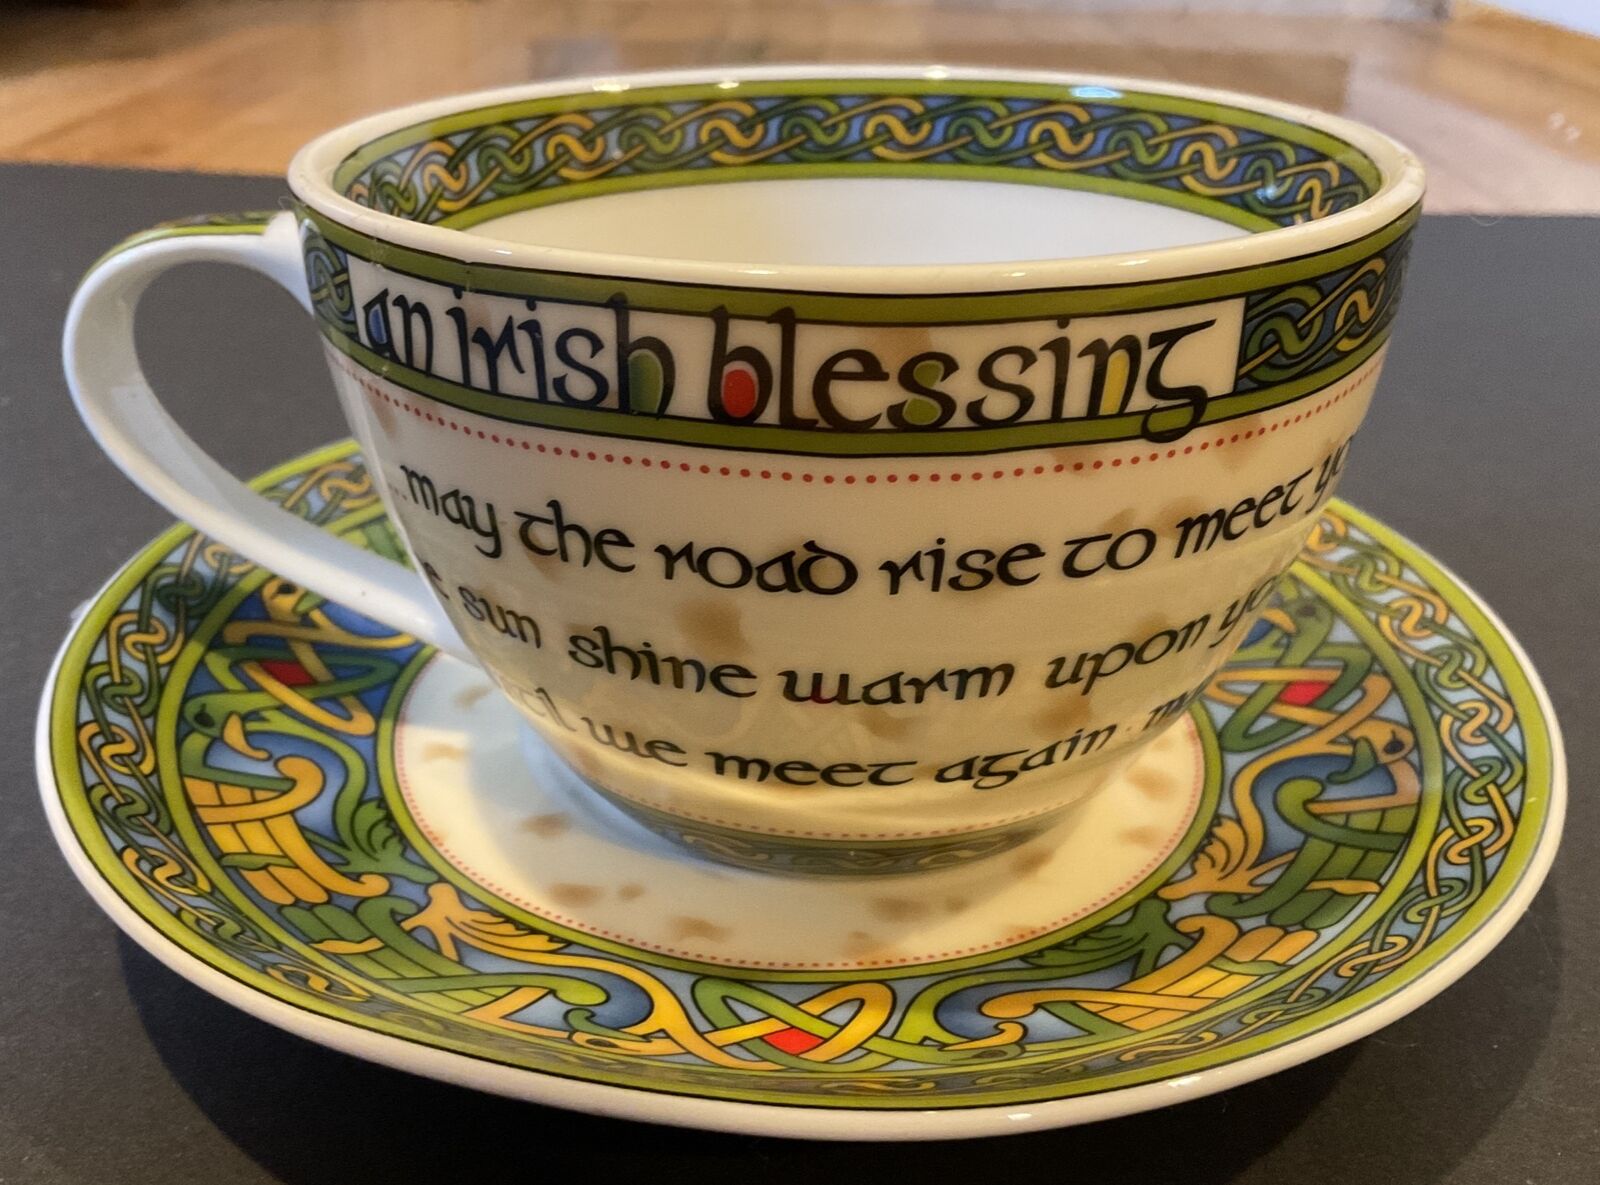 IRISH BLESSING TEA CUP & SAUCER - NEW BONE CHINA - MADE BY CLARA